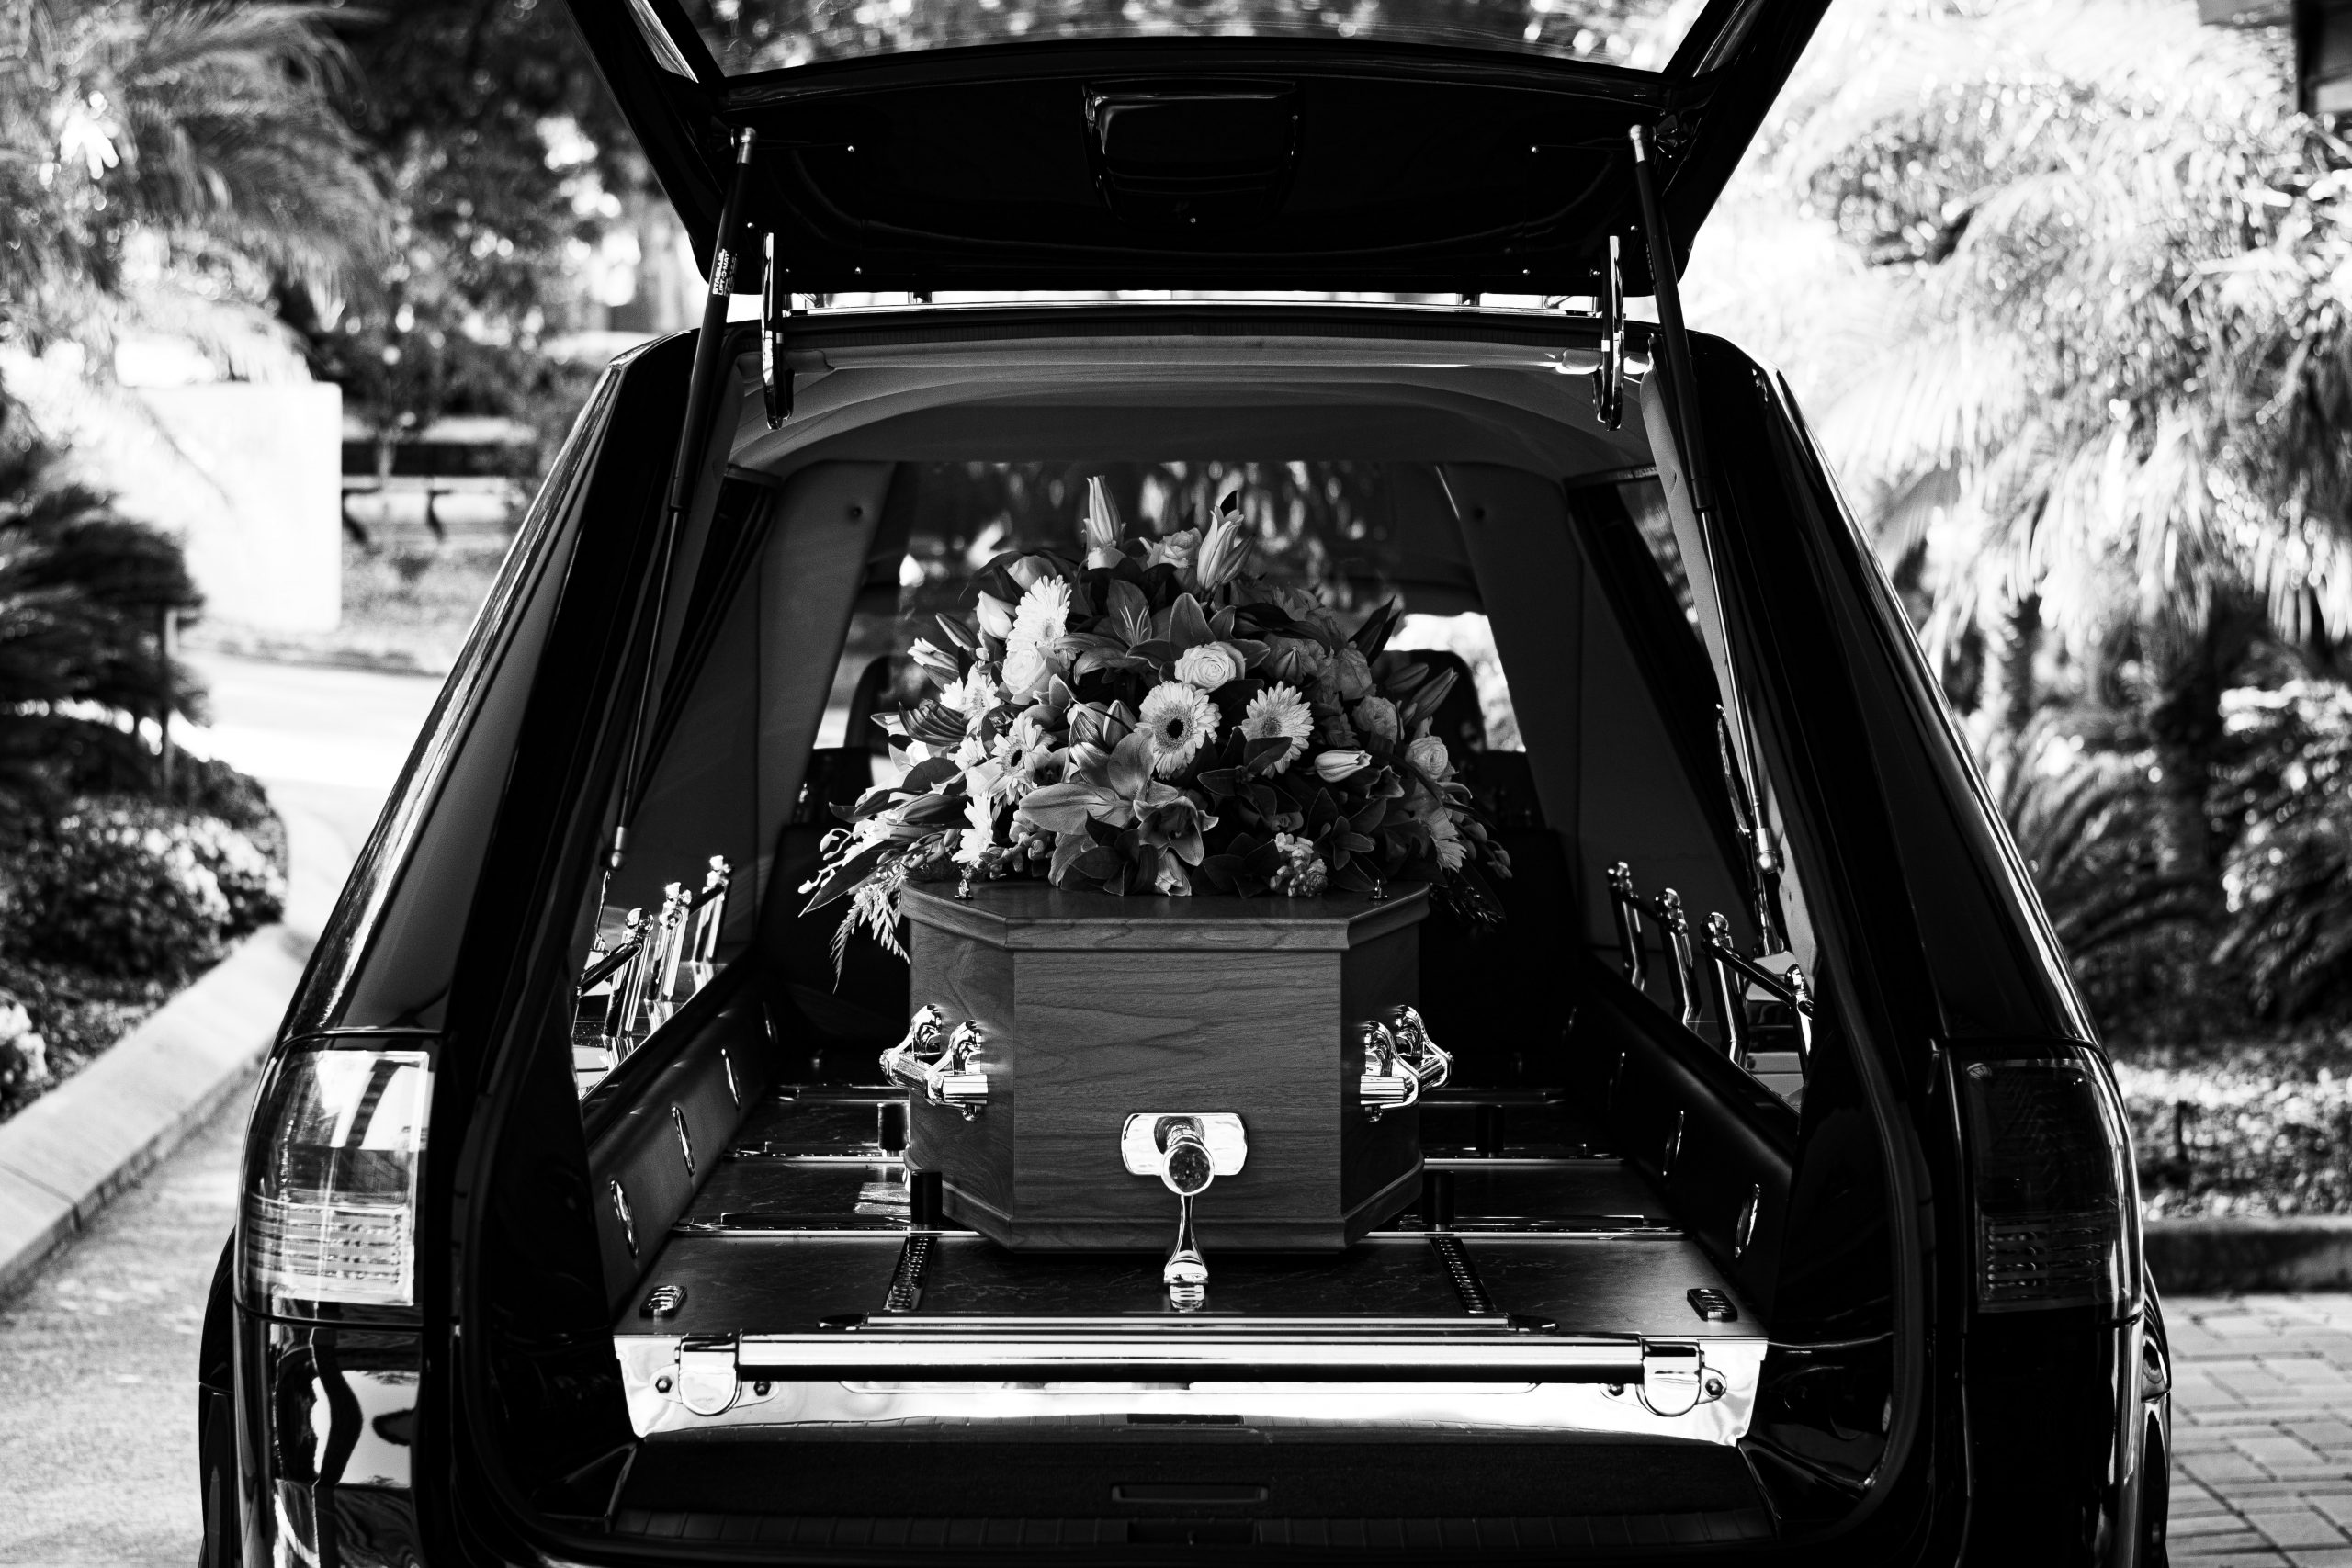 Otter Valley Funerals